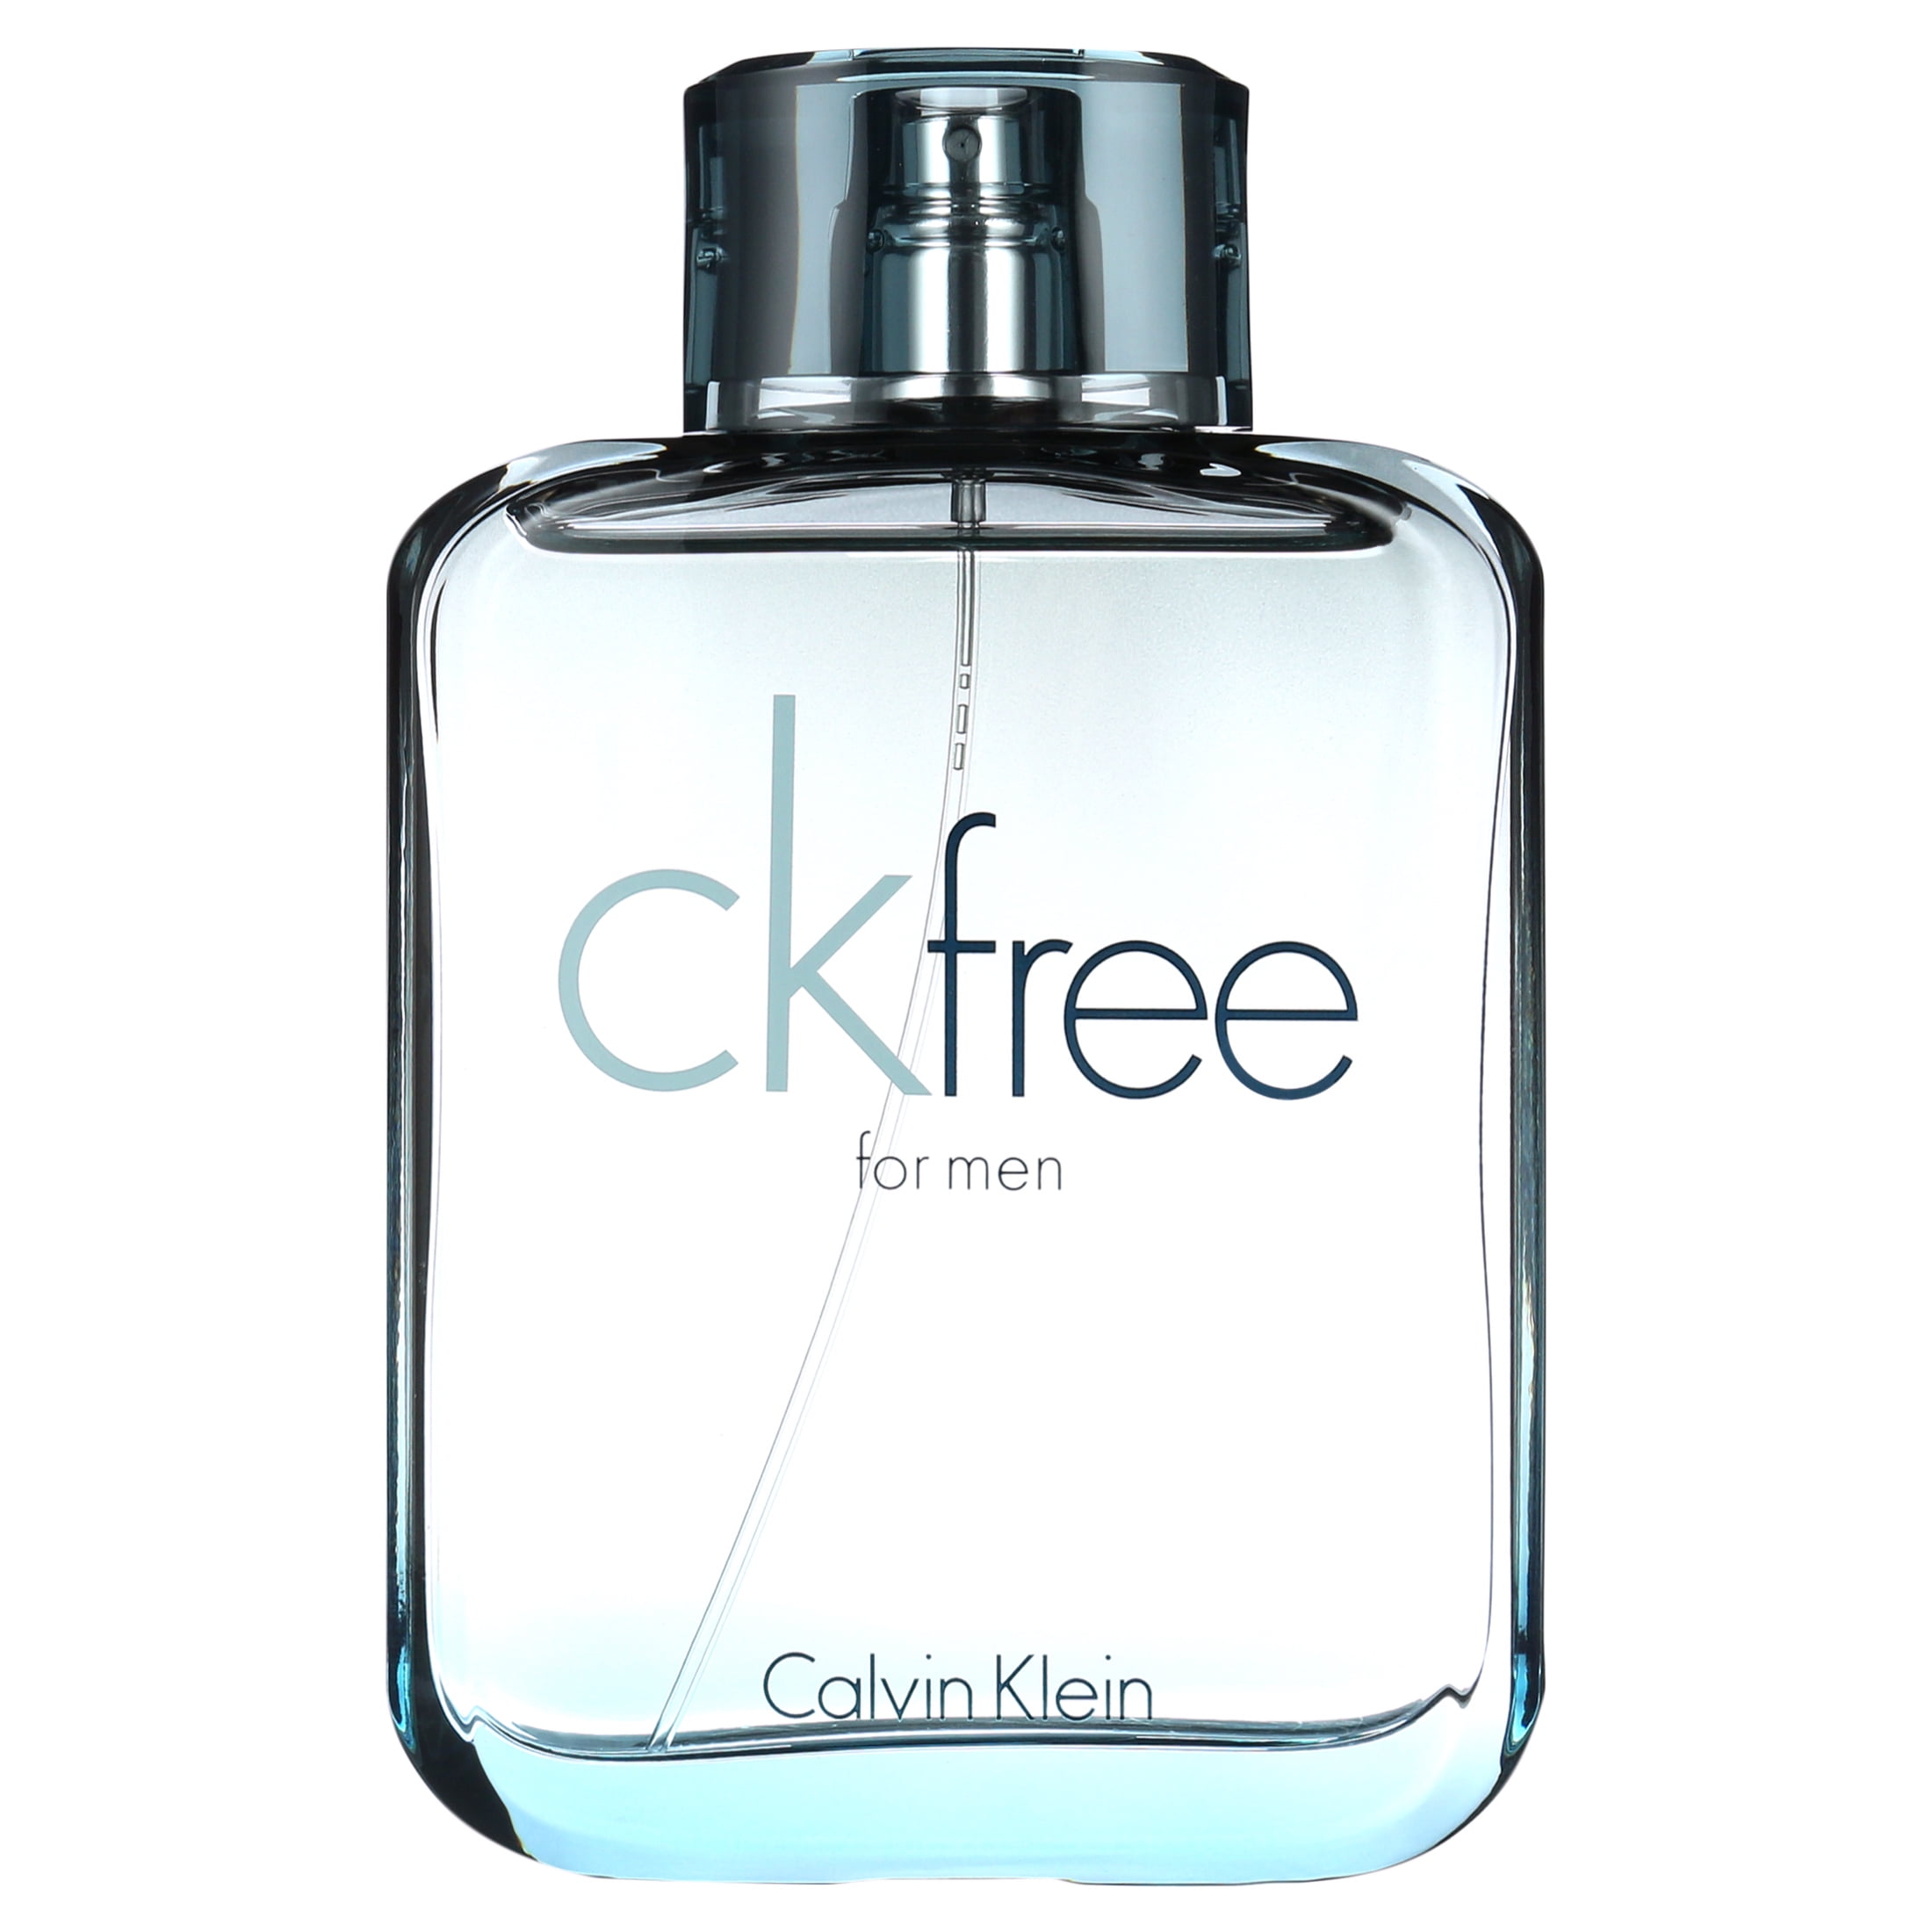 Buy Calvin Klein CK Free Eau De Toilette Spray, Cologne for Men,  Oz  Online at Lowest Price in Ubuy Nepal. 28544719